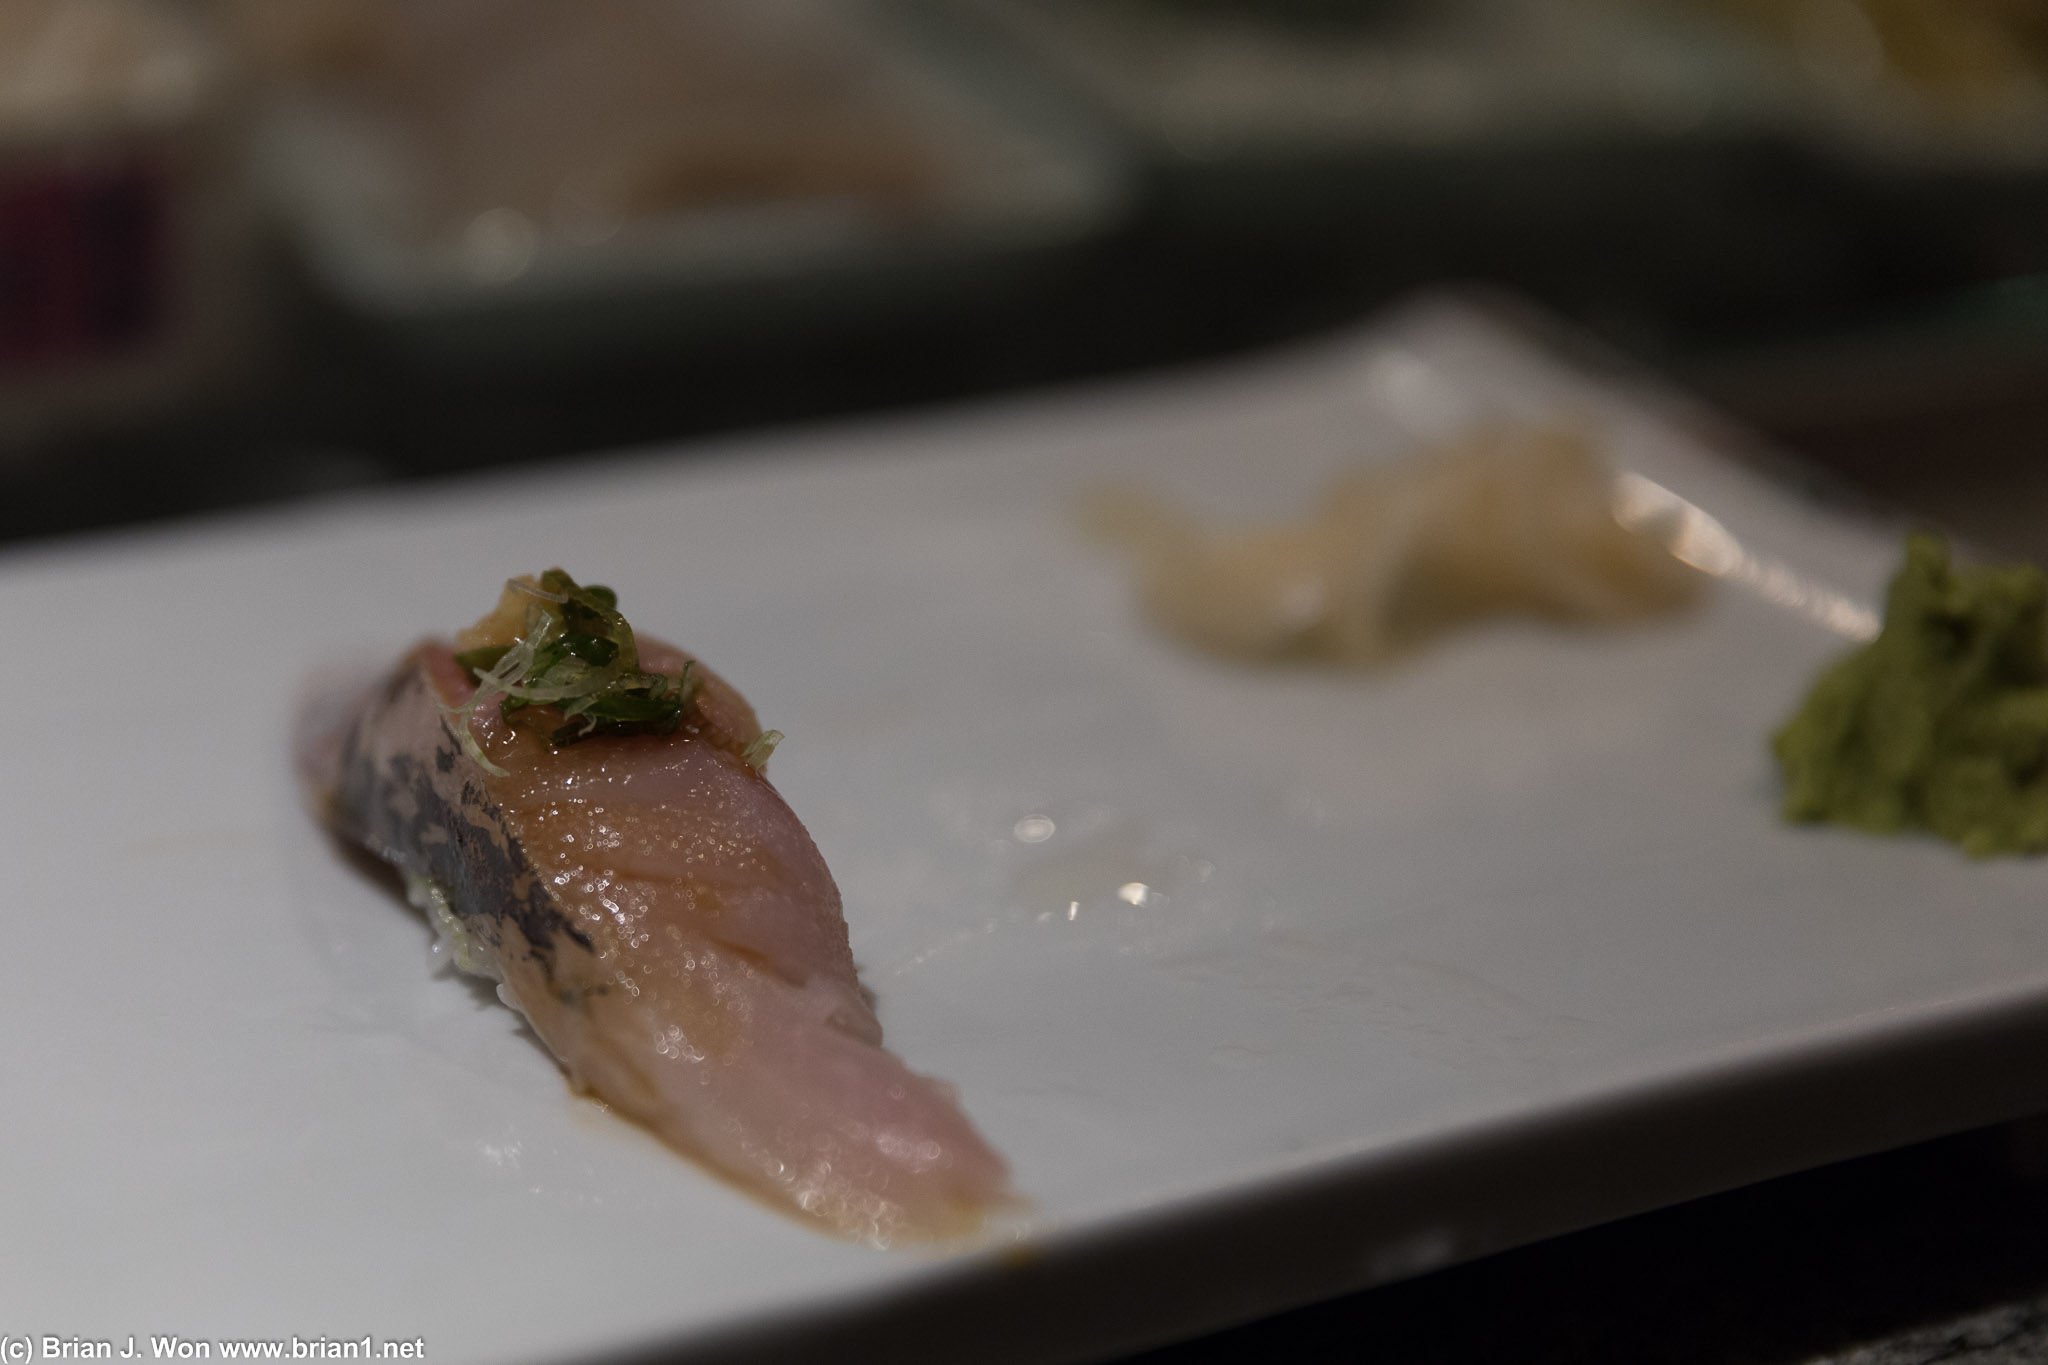 Japanese mackerel was excellent.